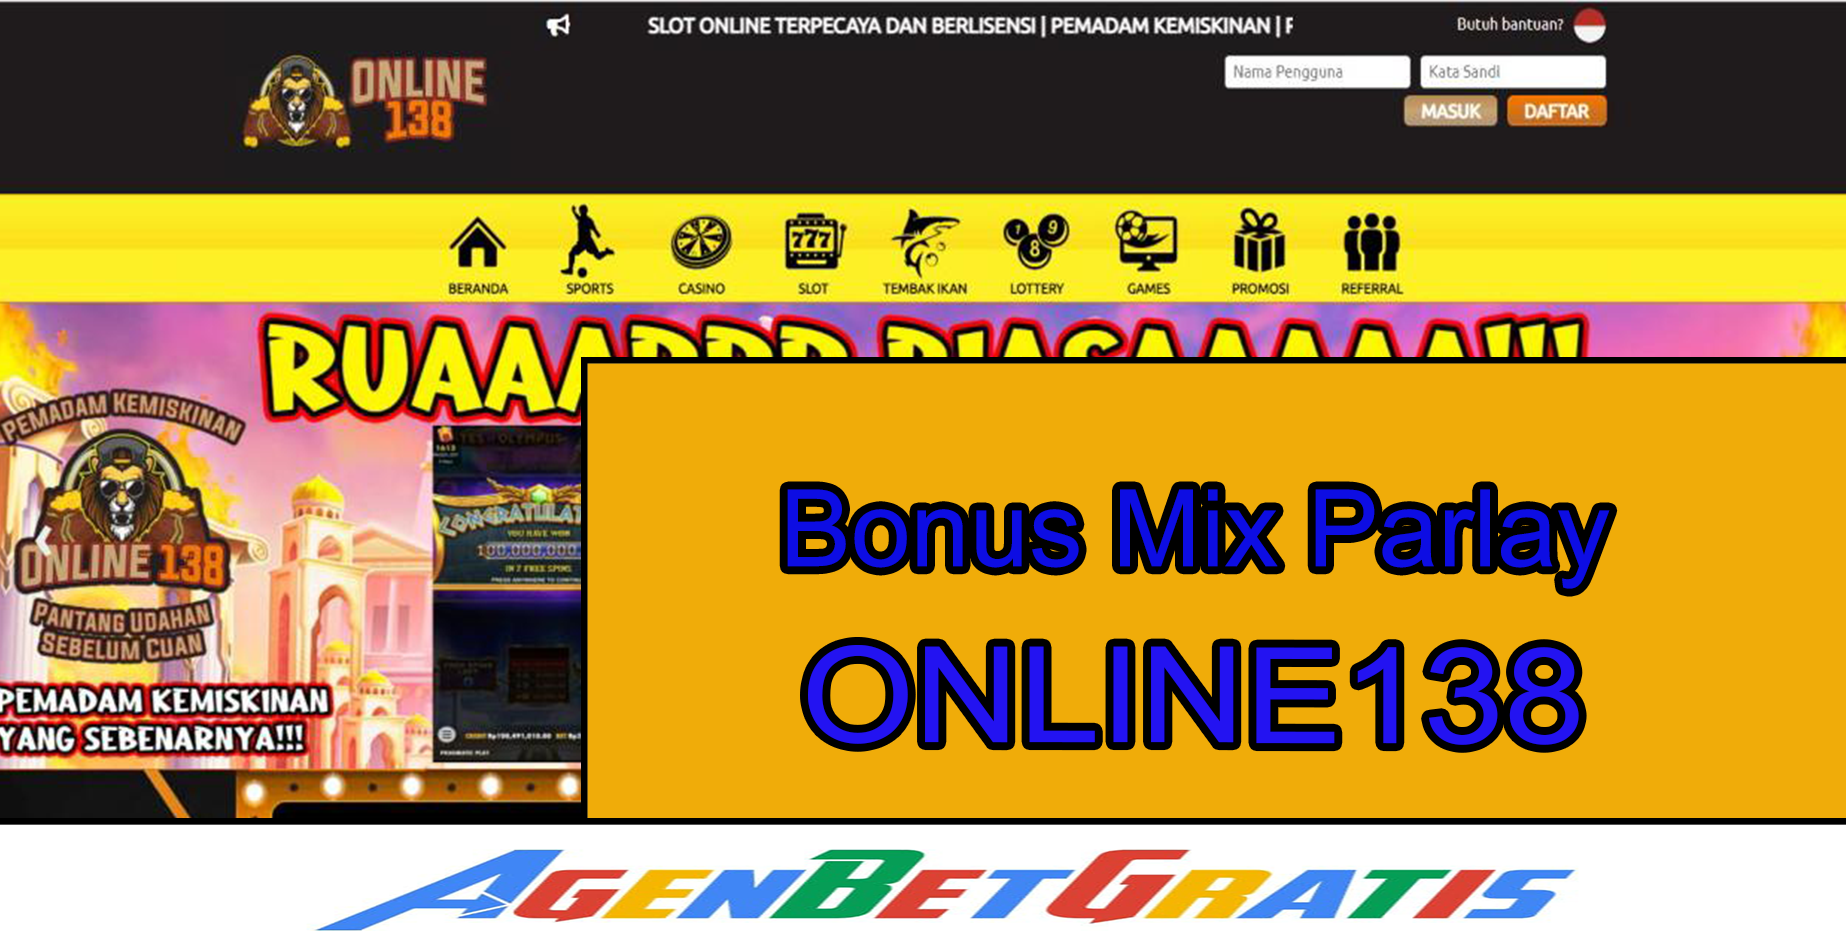 ONLINE138 - Bonus Mix Parlay